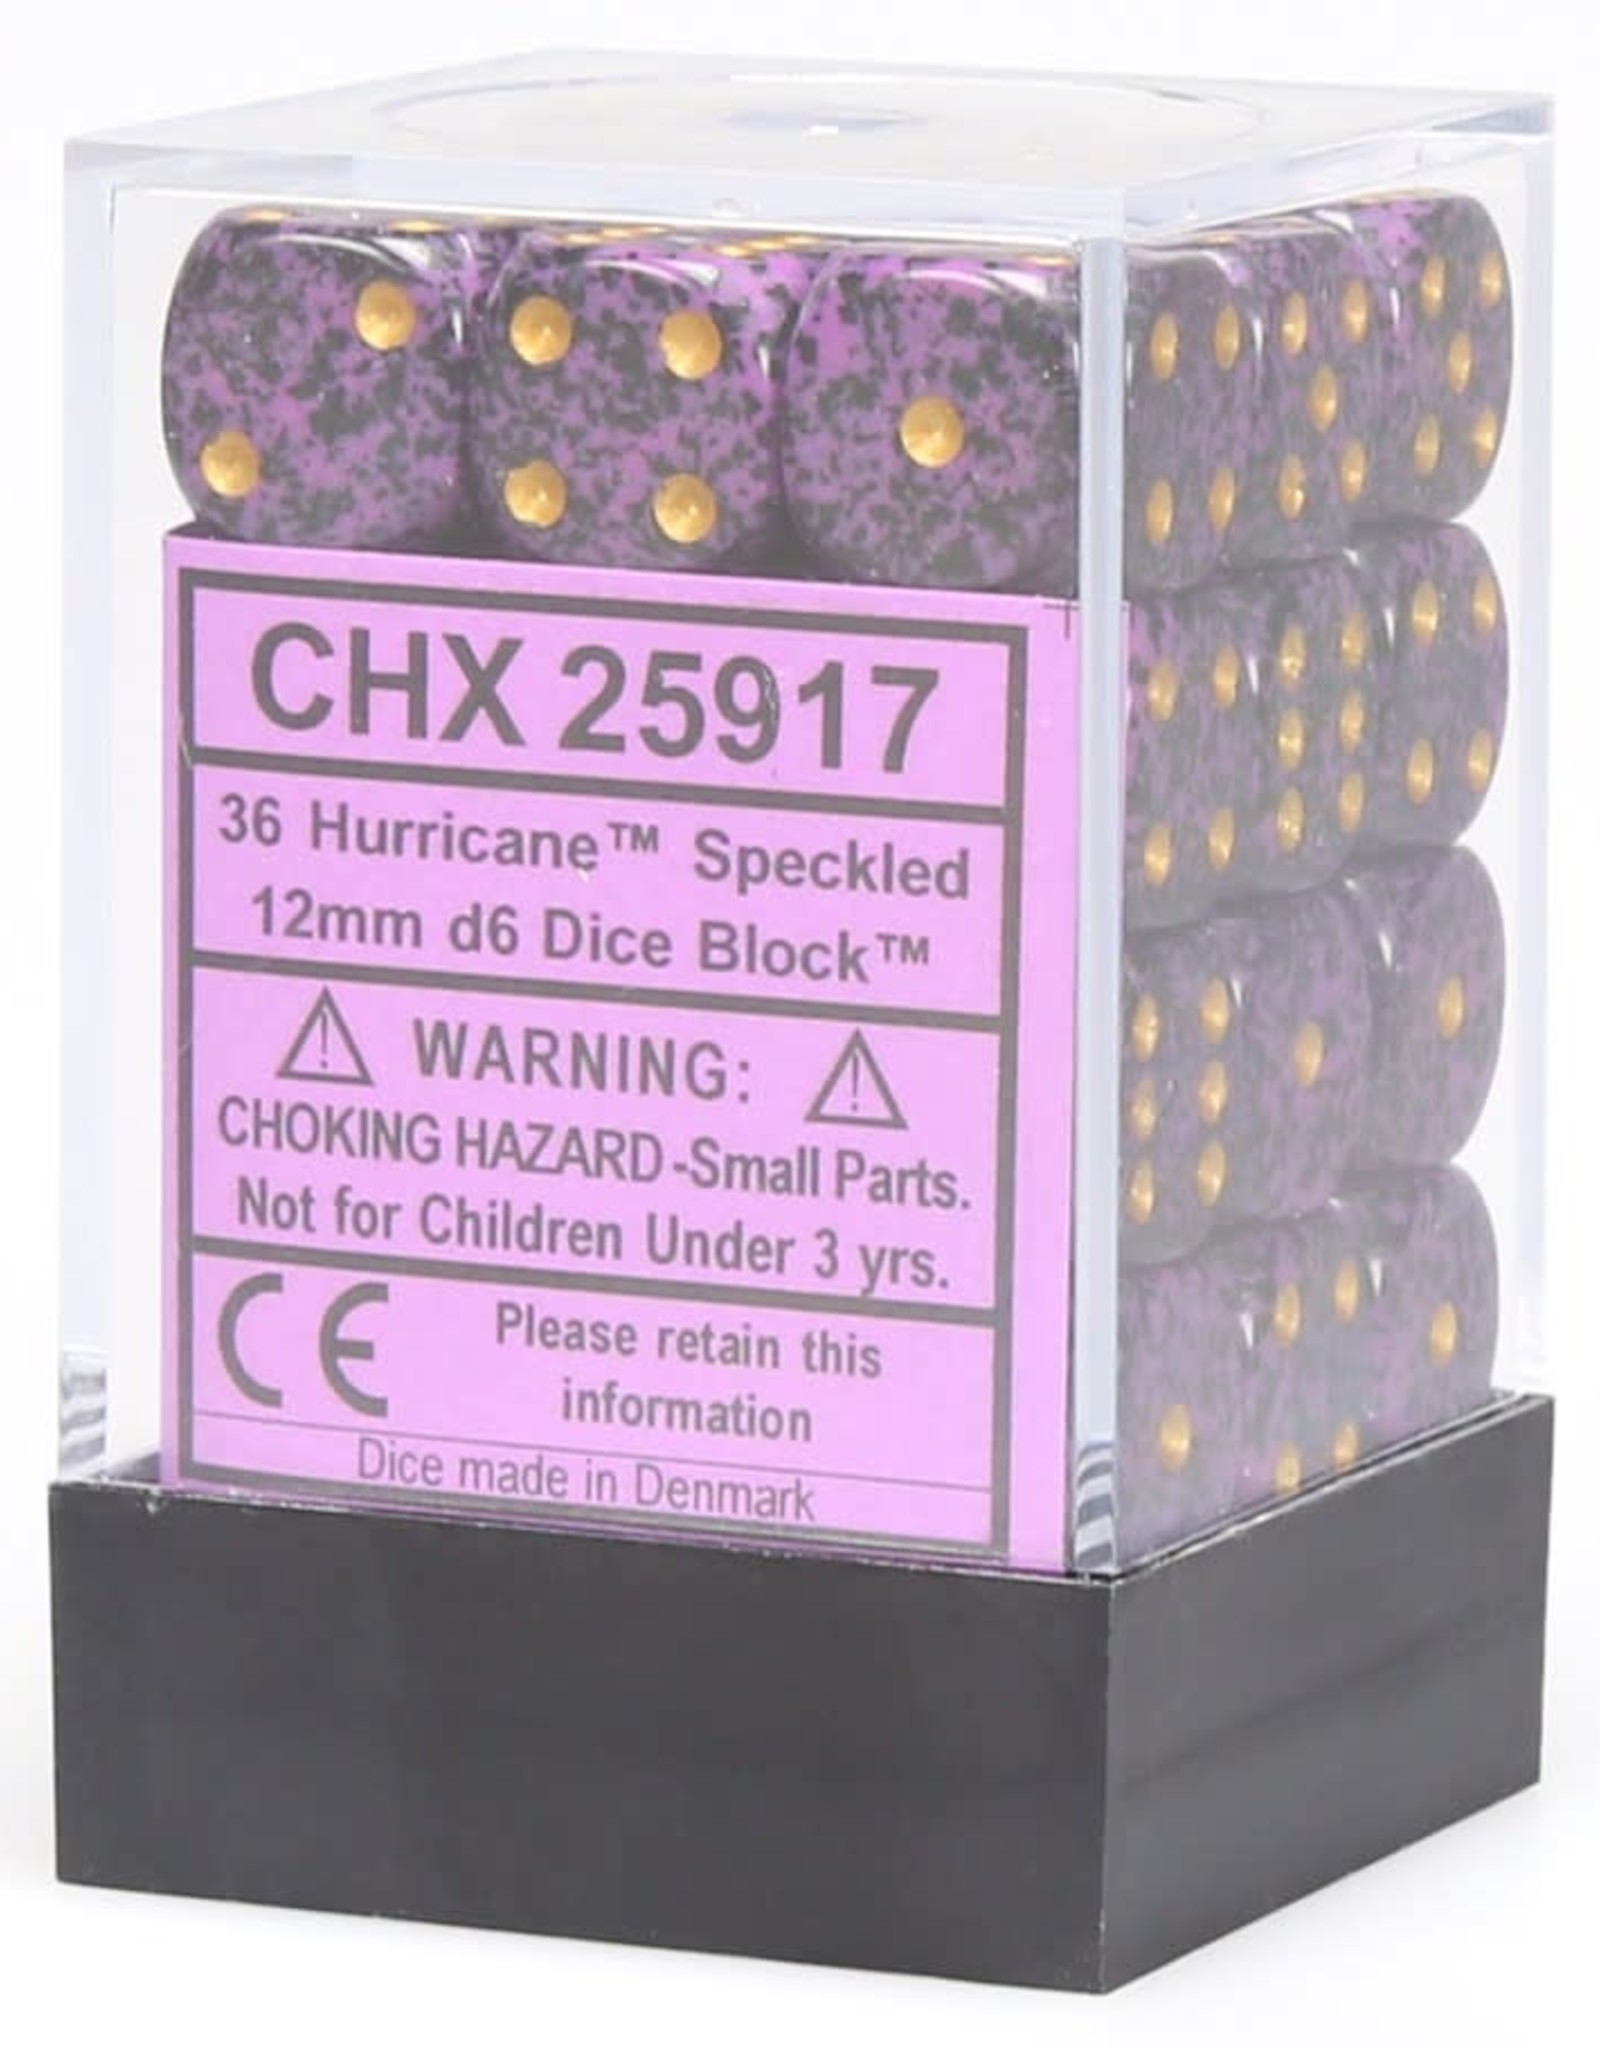 Chessex CHX Speckled Dice: Hurricane 12mm d6 Block (36ct) 25917